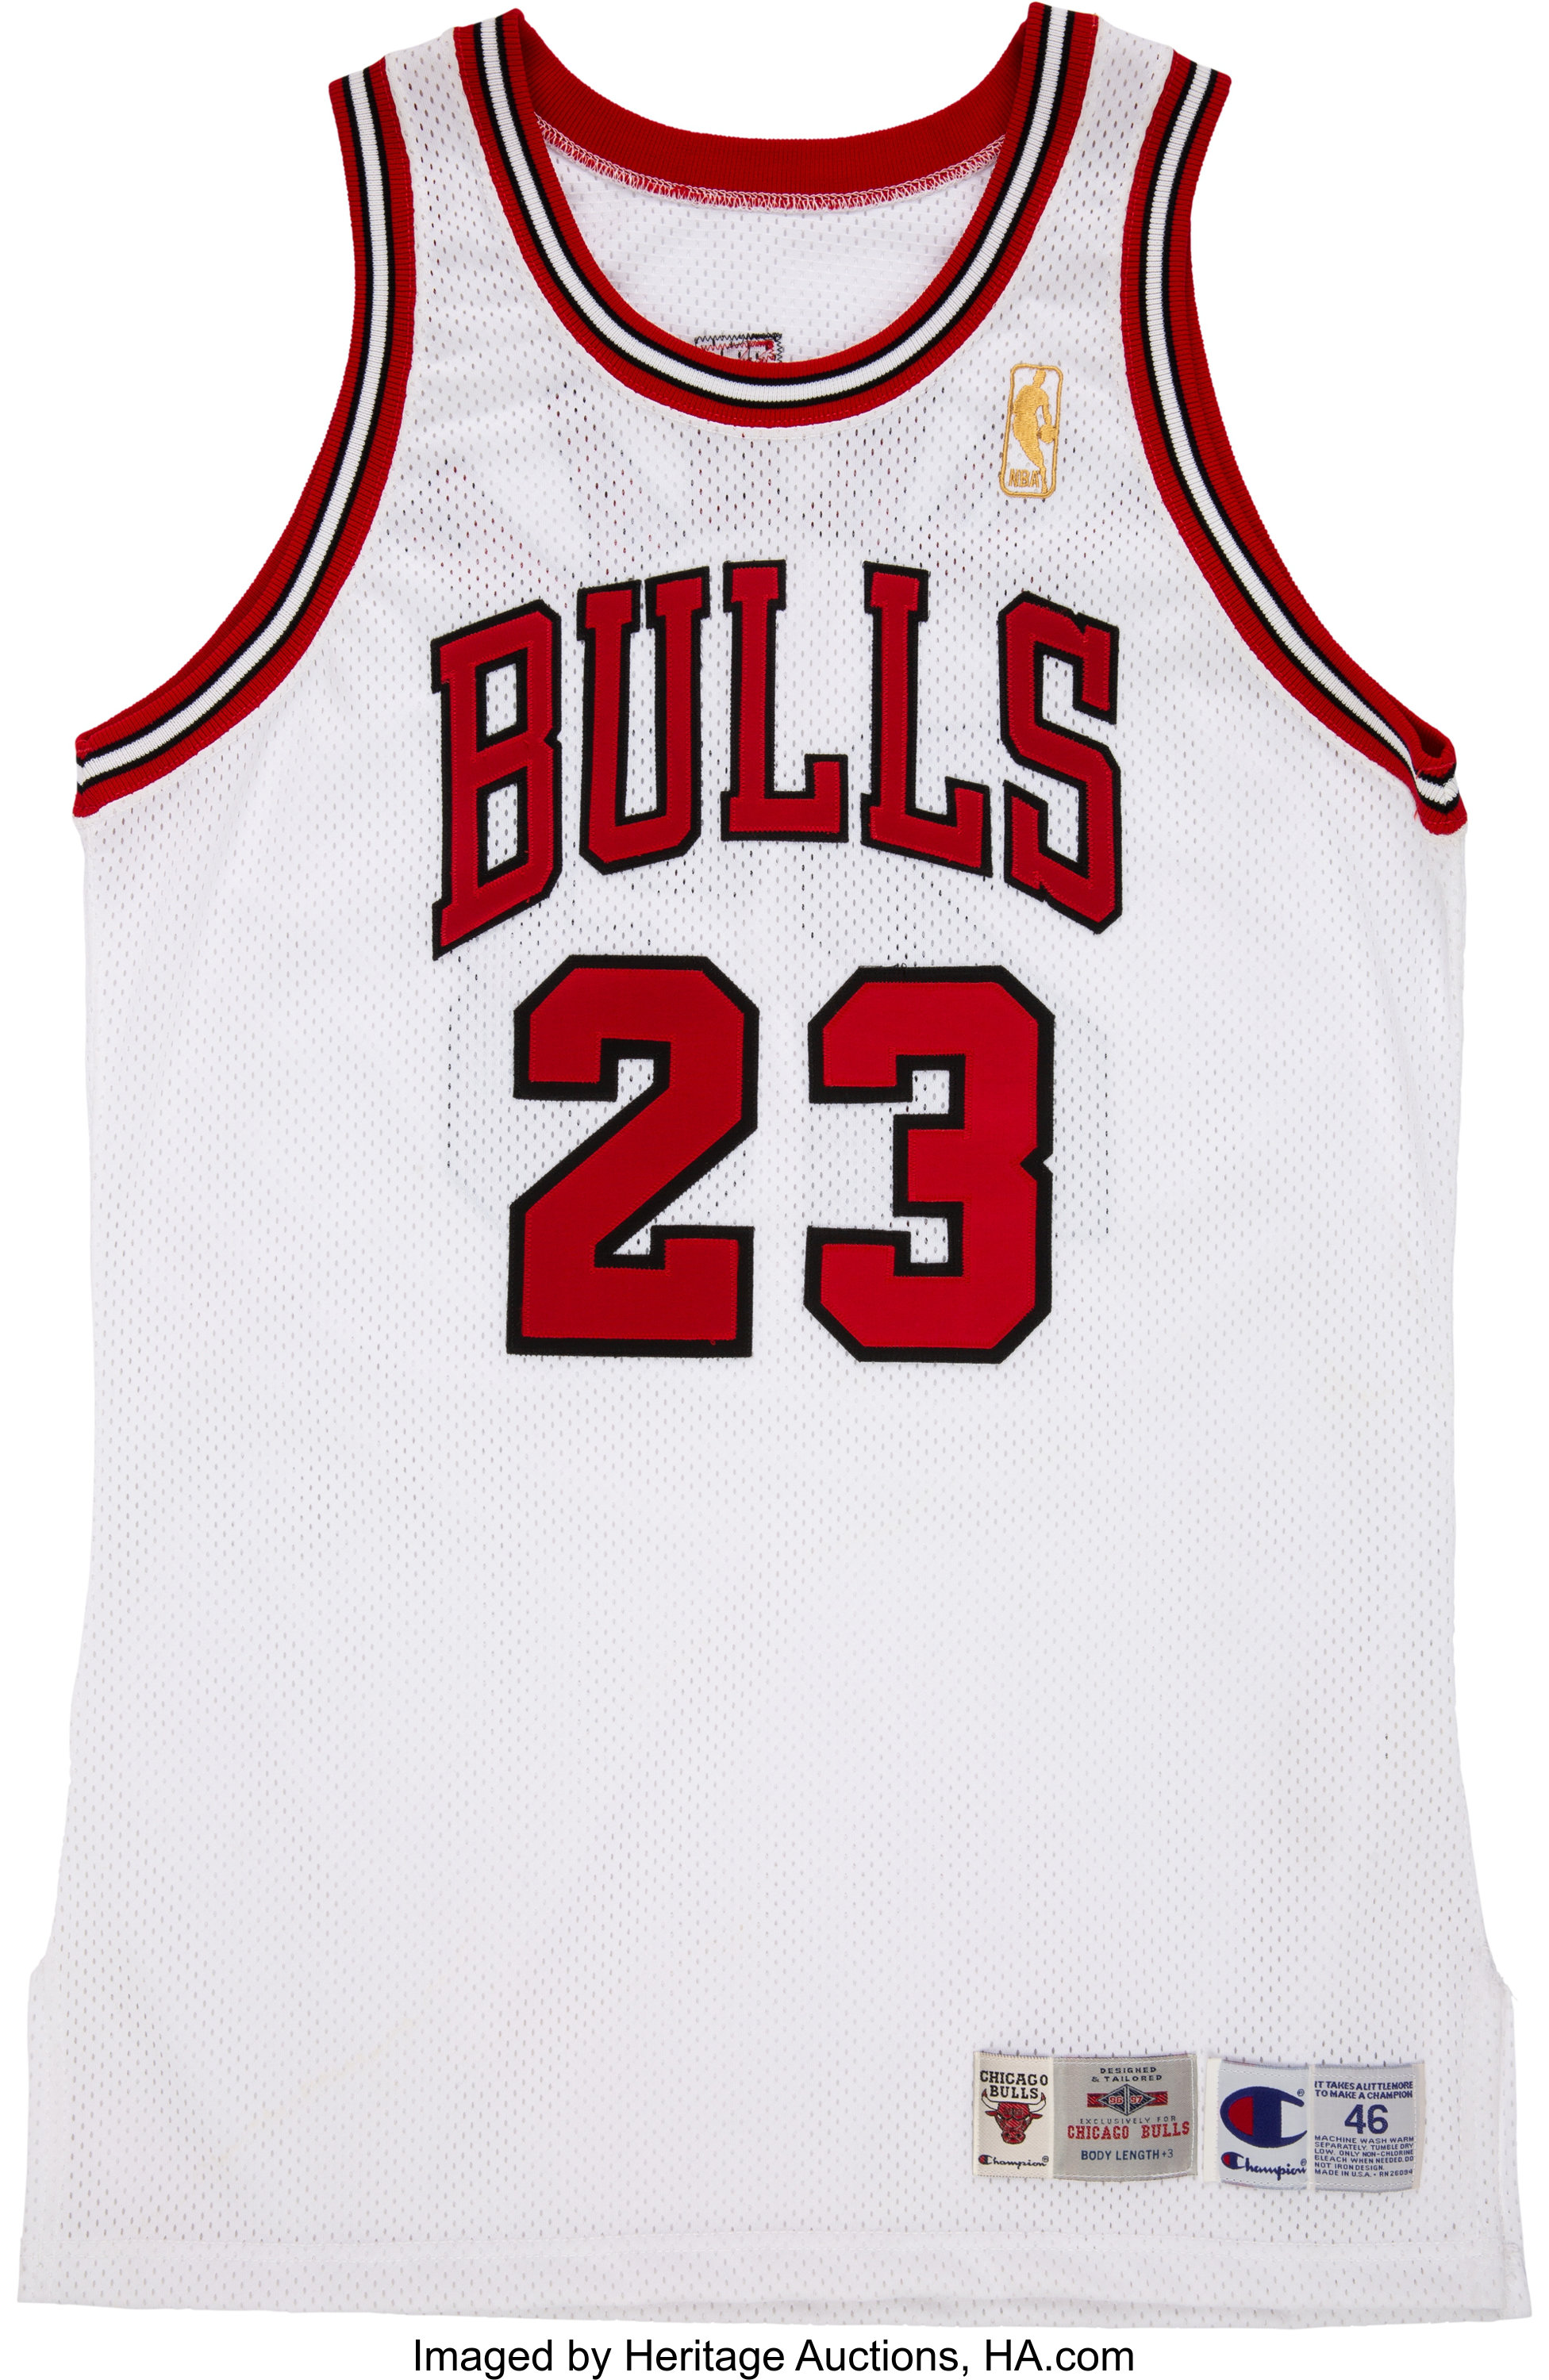 Jordan Jersey Chicago Bulls Art Print - Perfect gift for the